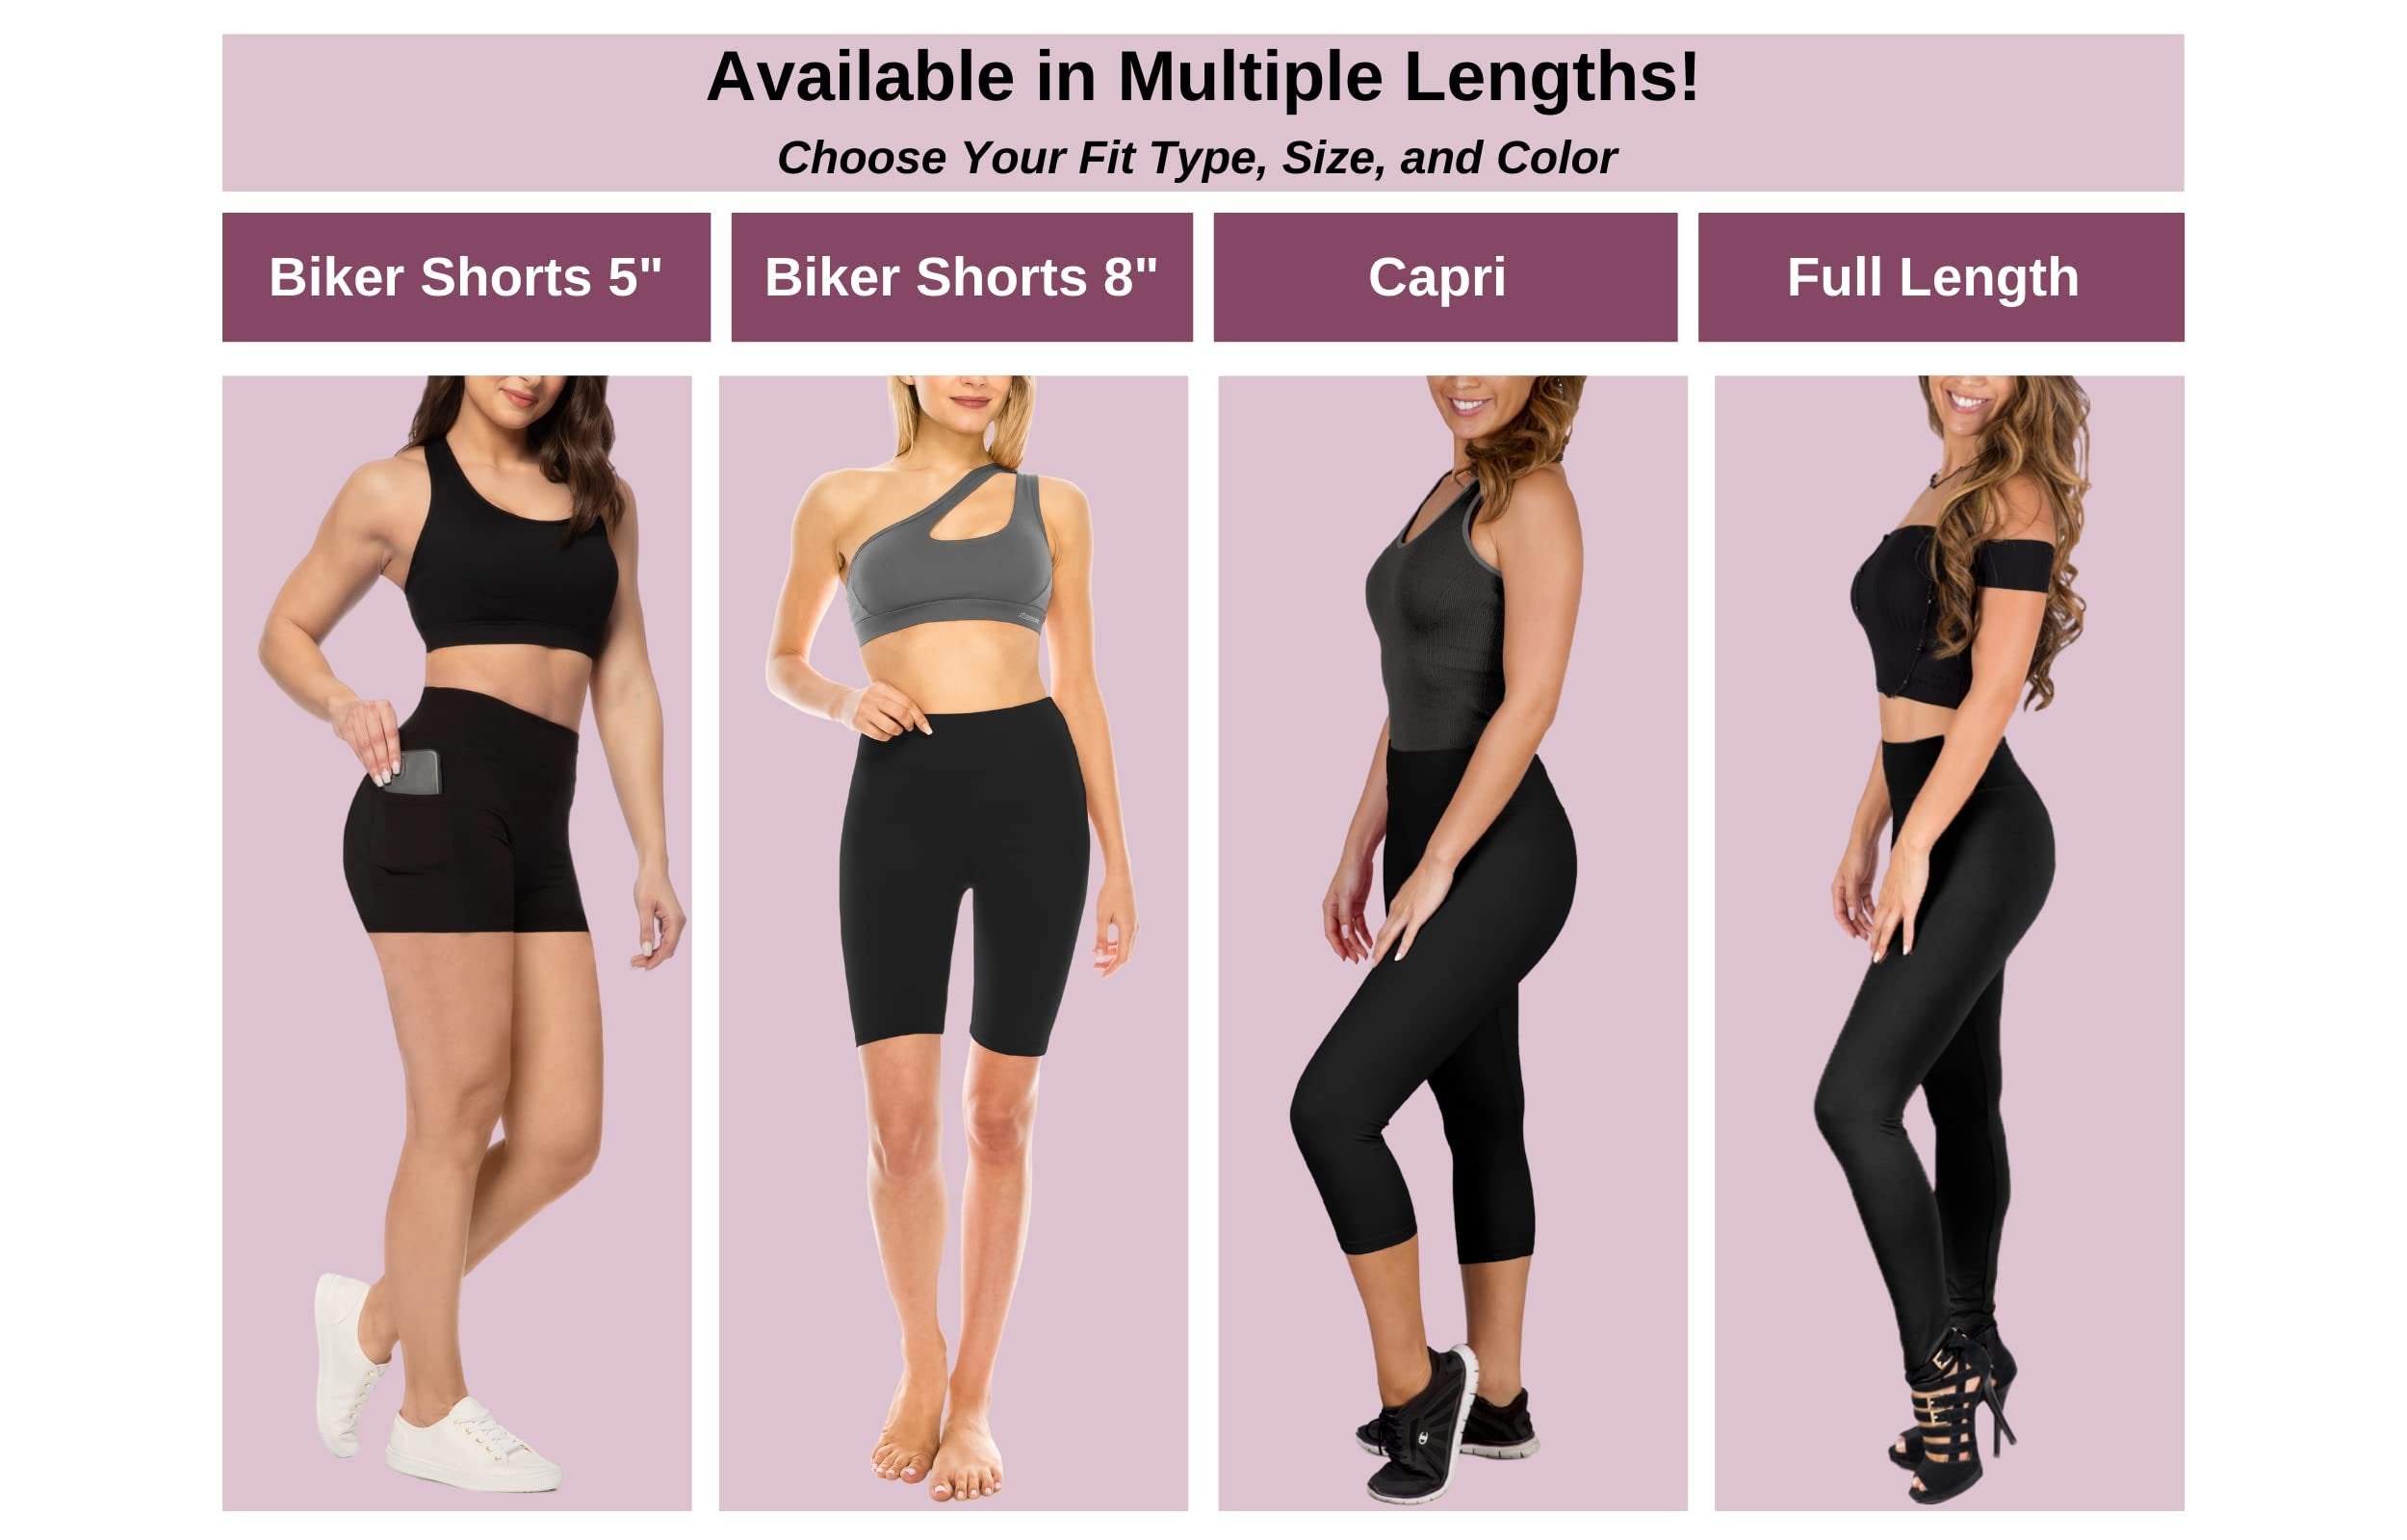 SATINA High Waisted Capri Leggings for Women - Capri Leggings for Women - High Waist for Tummy Control - Fuchsia Capri Leggings for |3 Inch Waistband (One Size, Fuchsia)